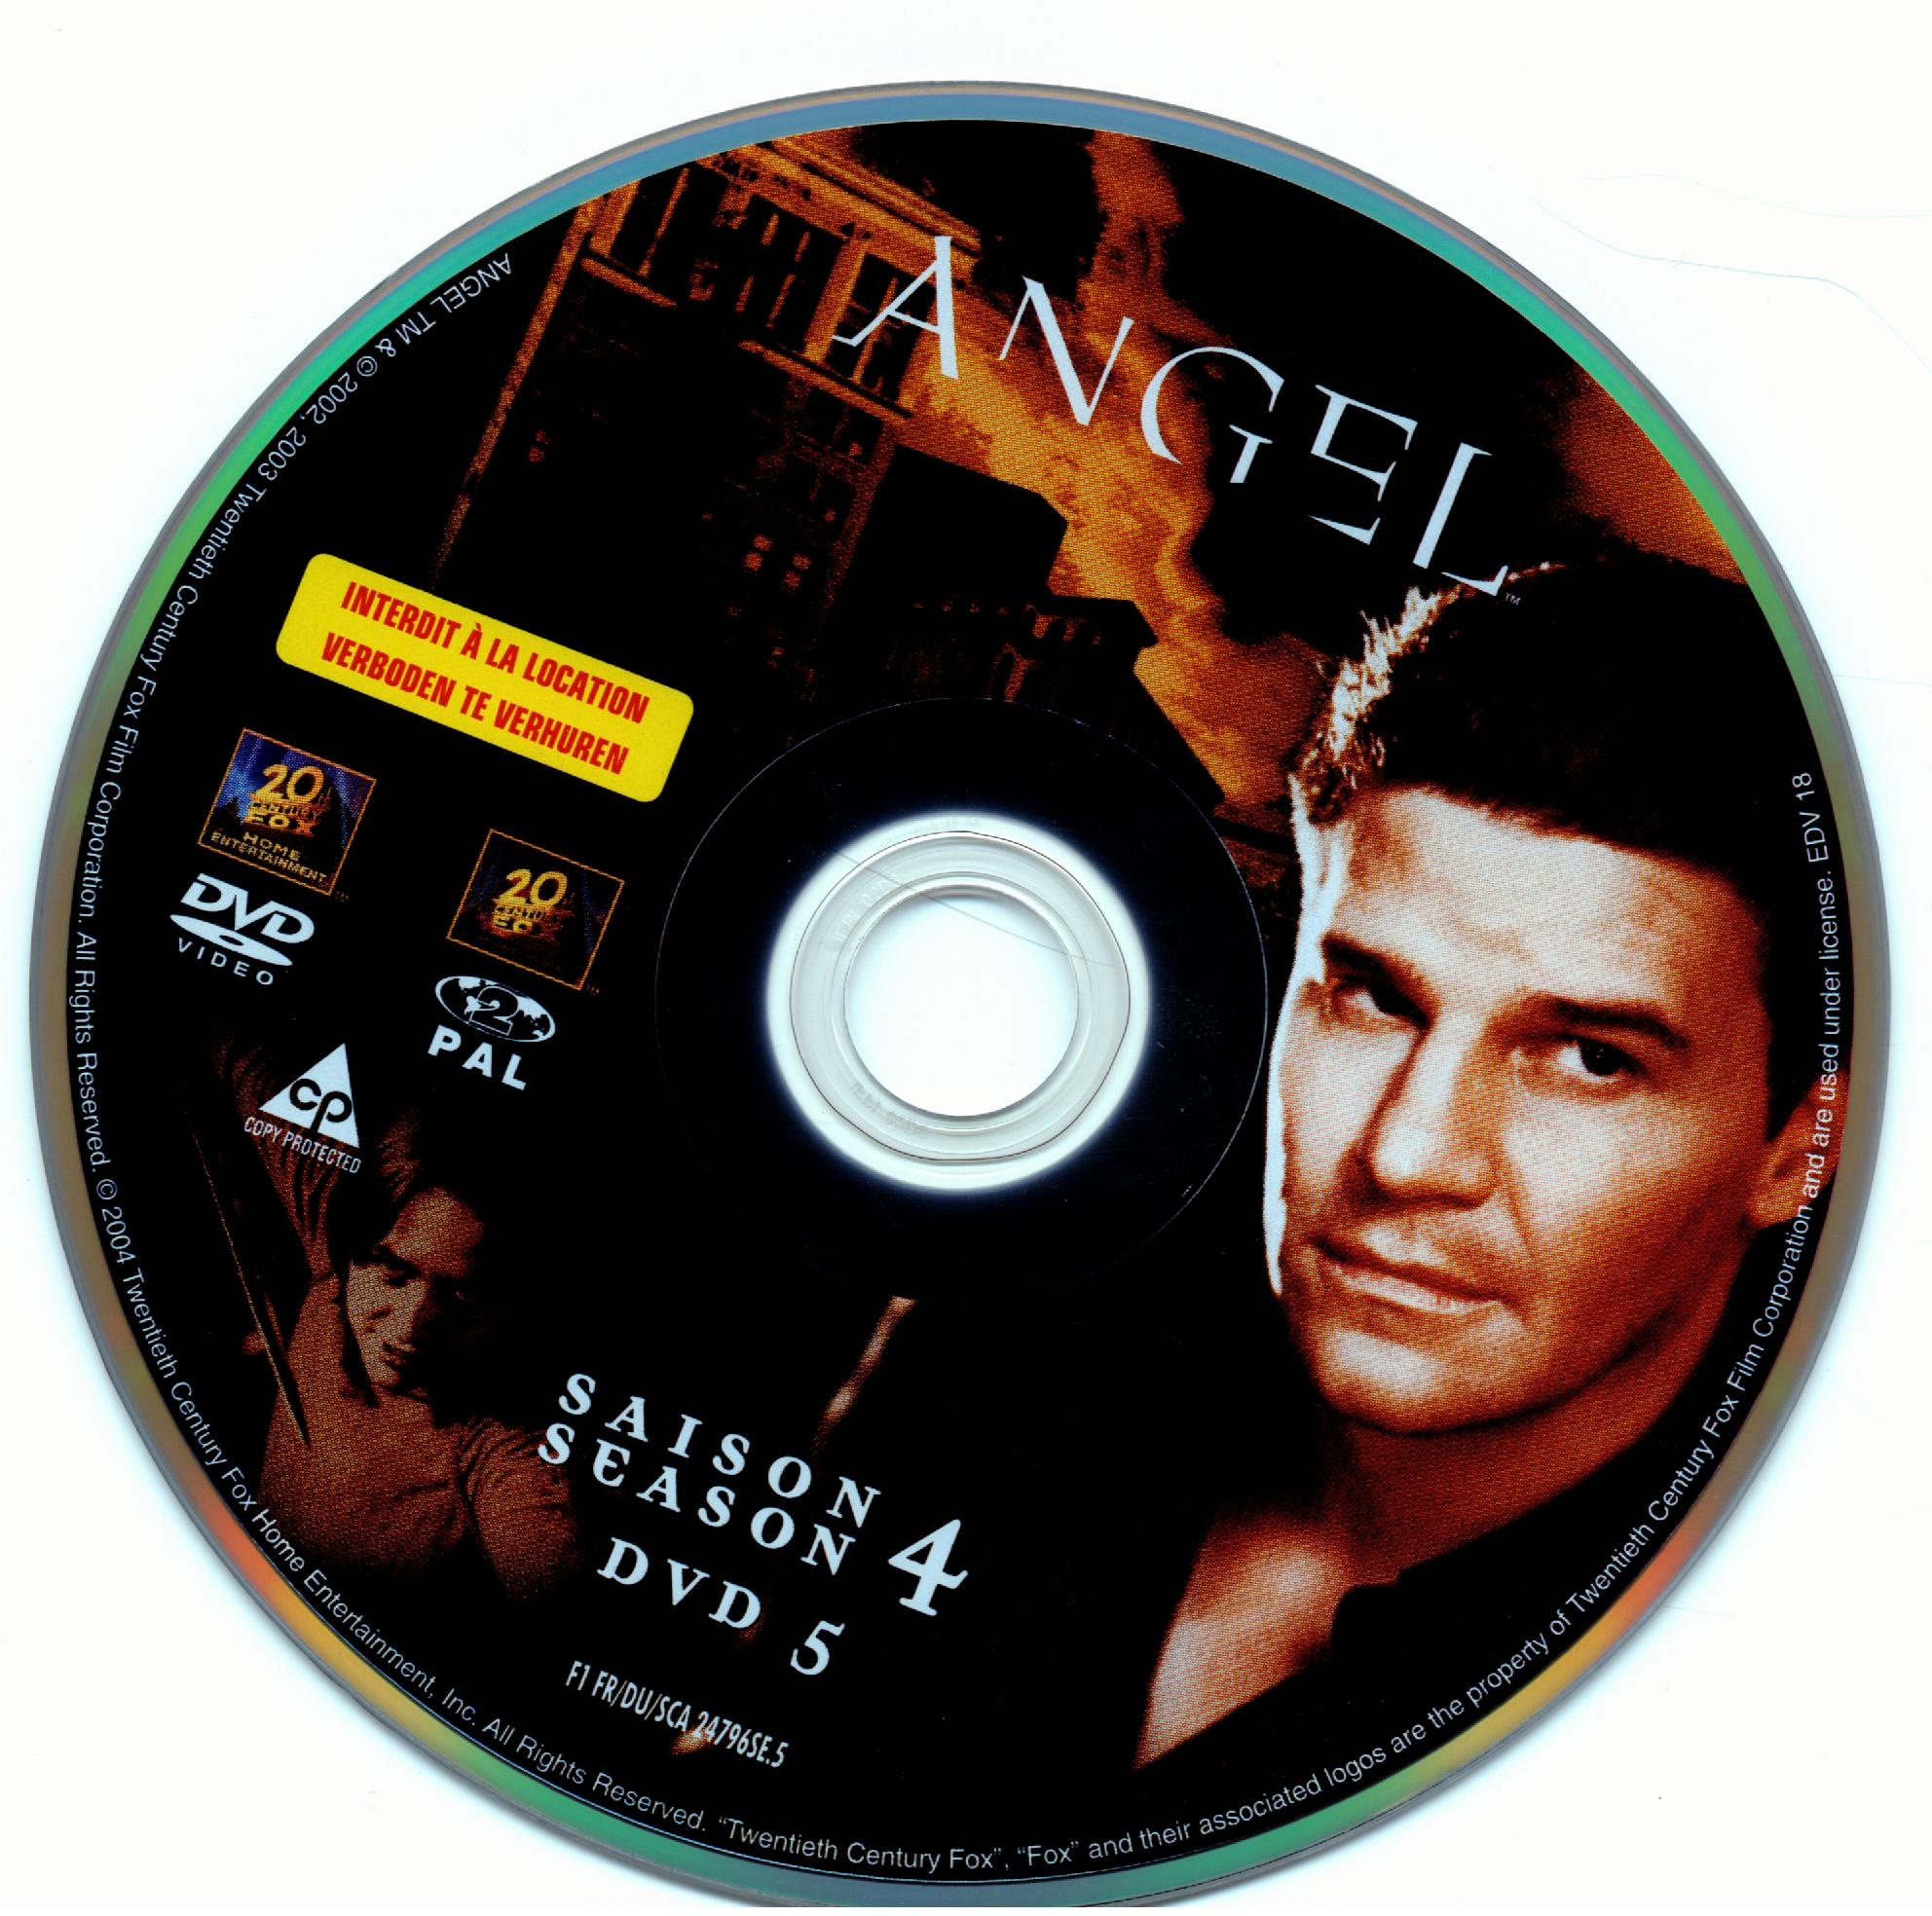 Angel Saison 4 dvd 5